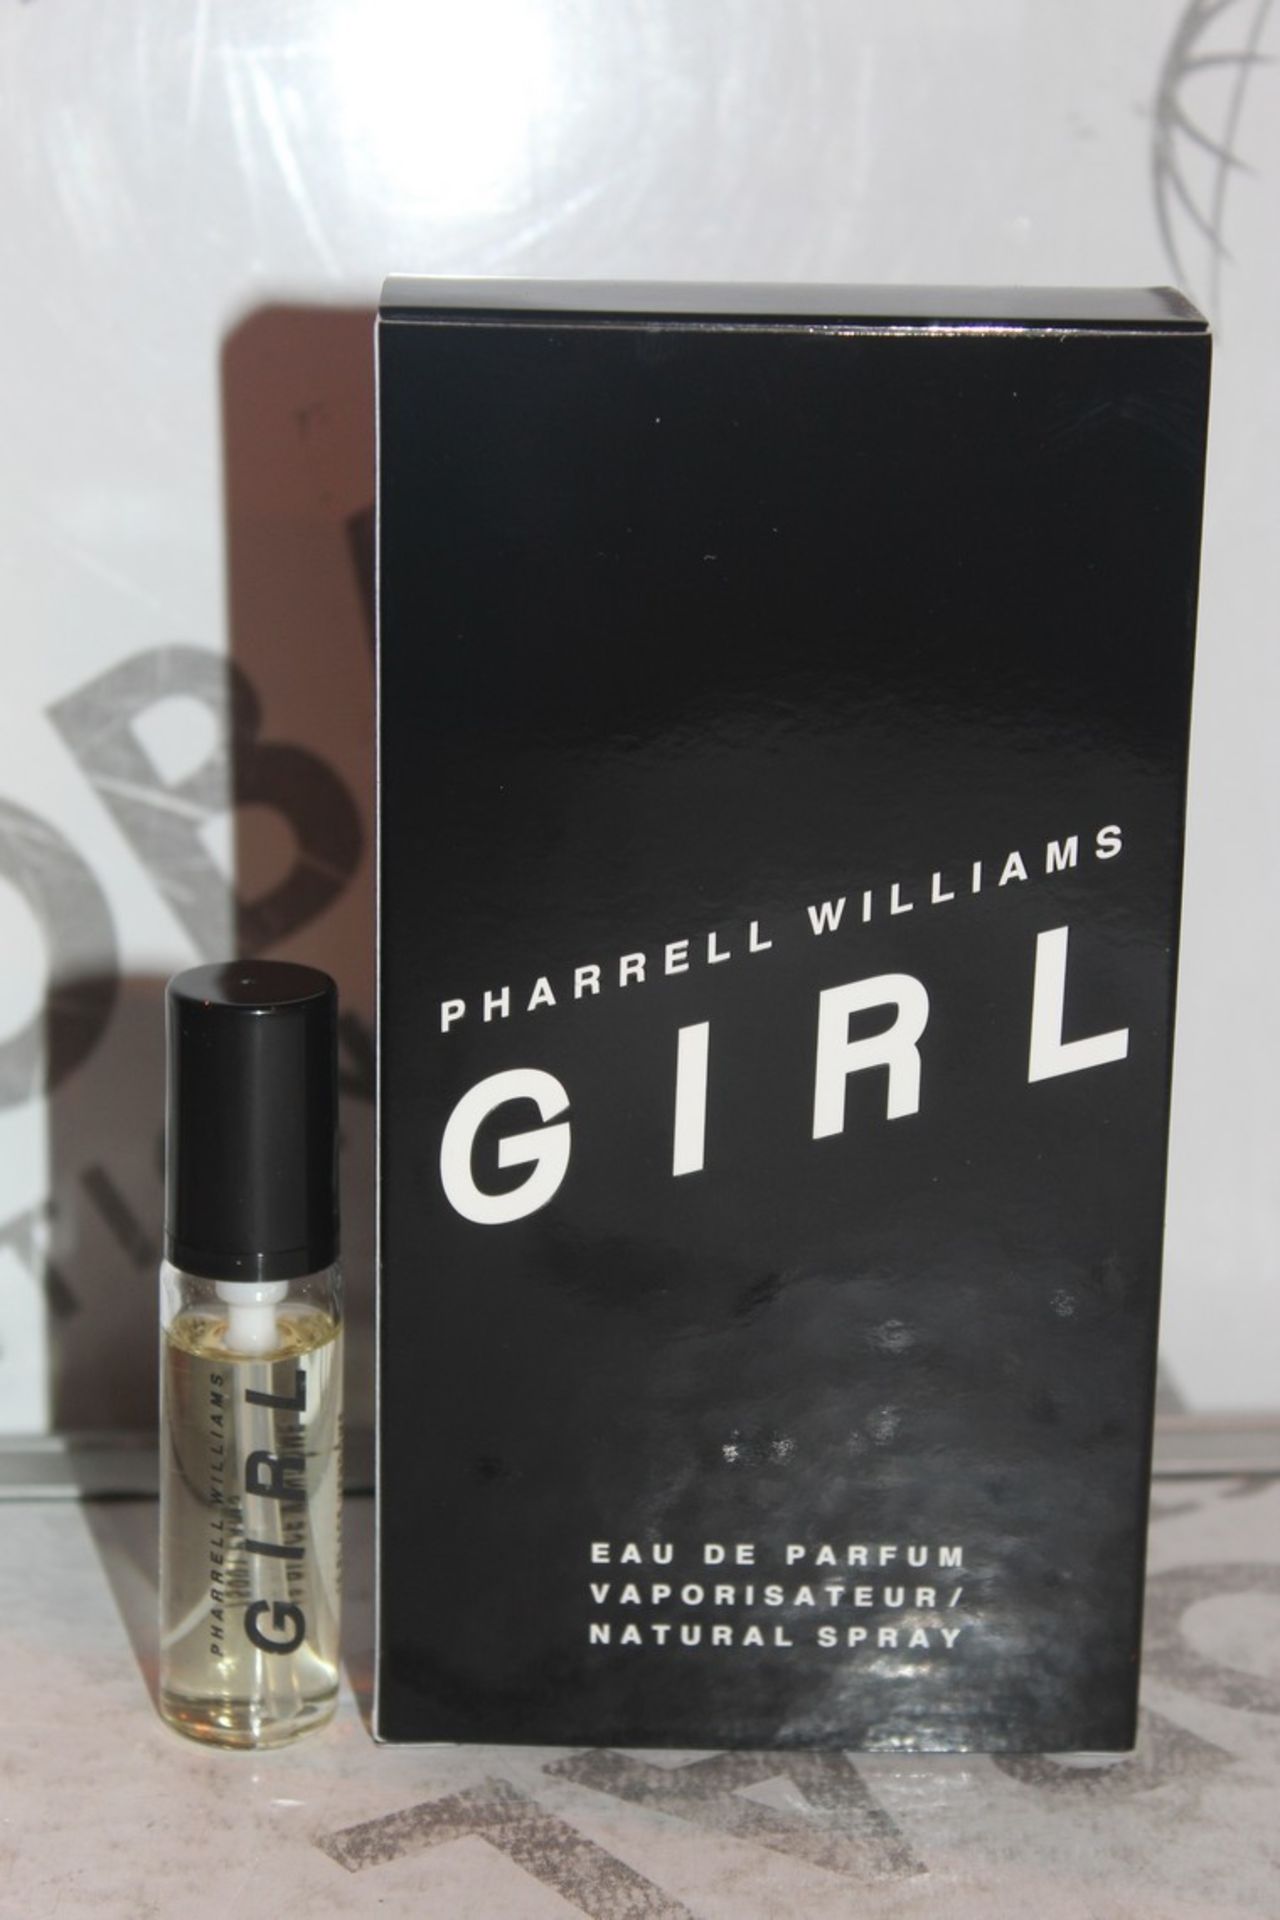 Lot to Contain 2 Brand New Pharrell Williams Perfume 10ml